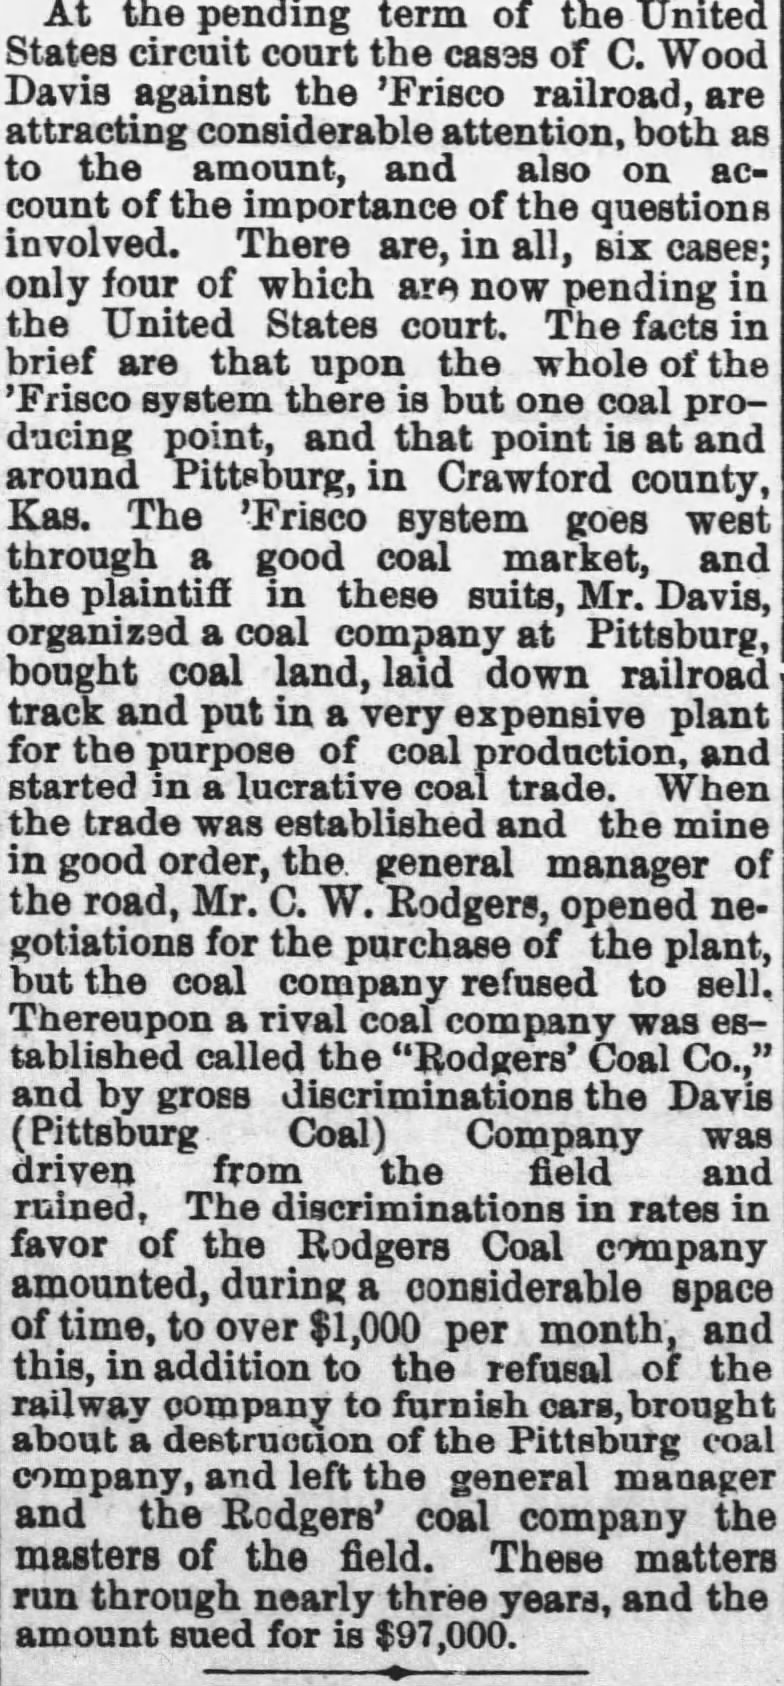 Rodgers Coal Co.